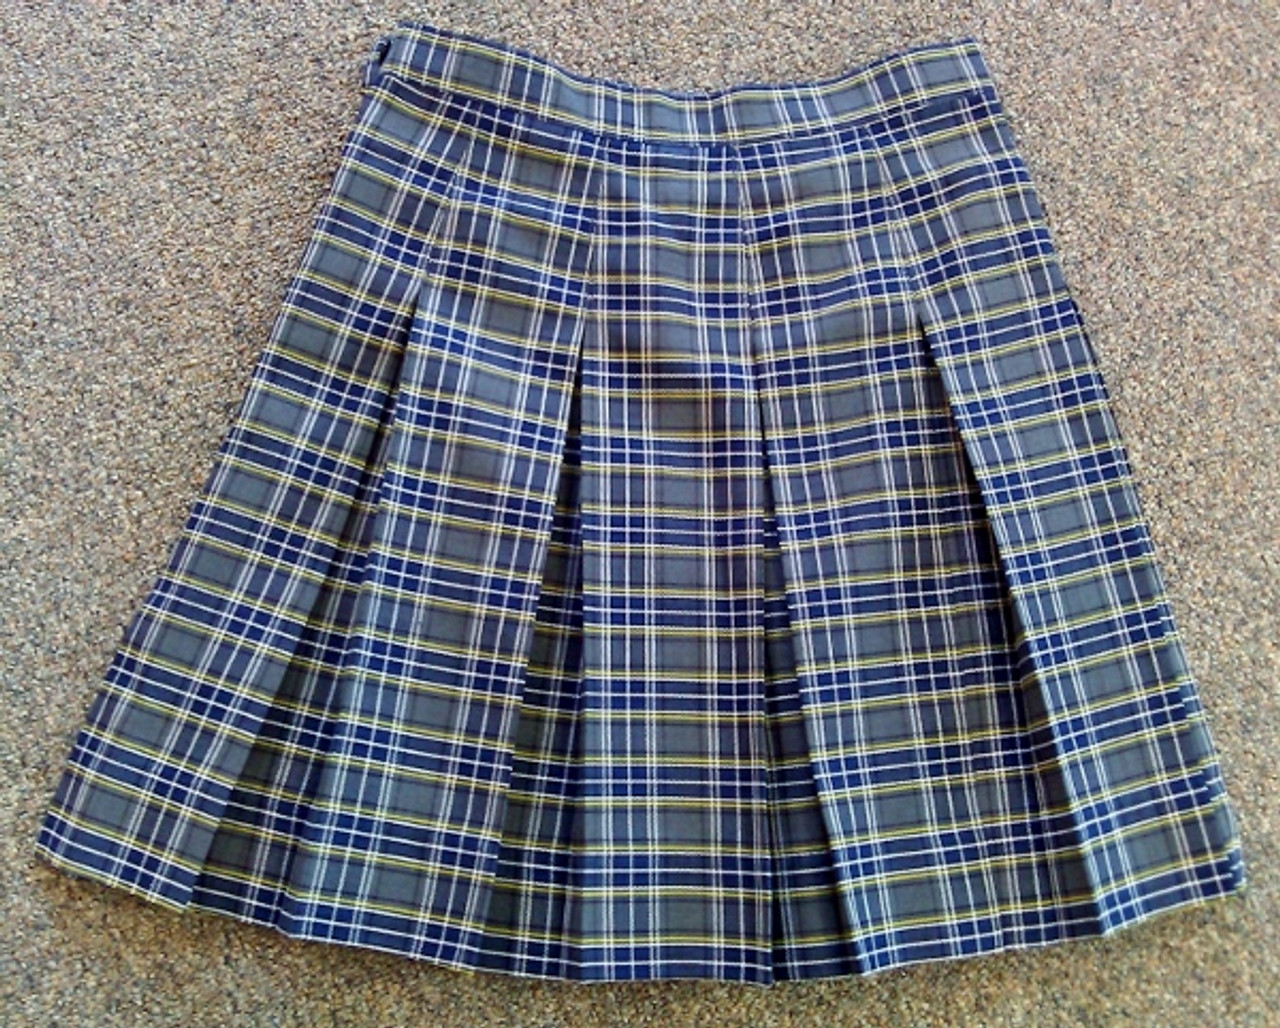 Skirt Plaid 42 - Educational Outfitters - Minnesota